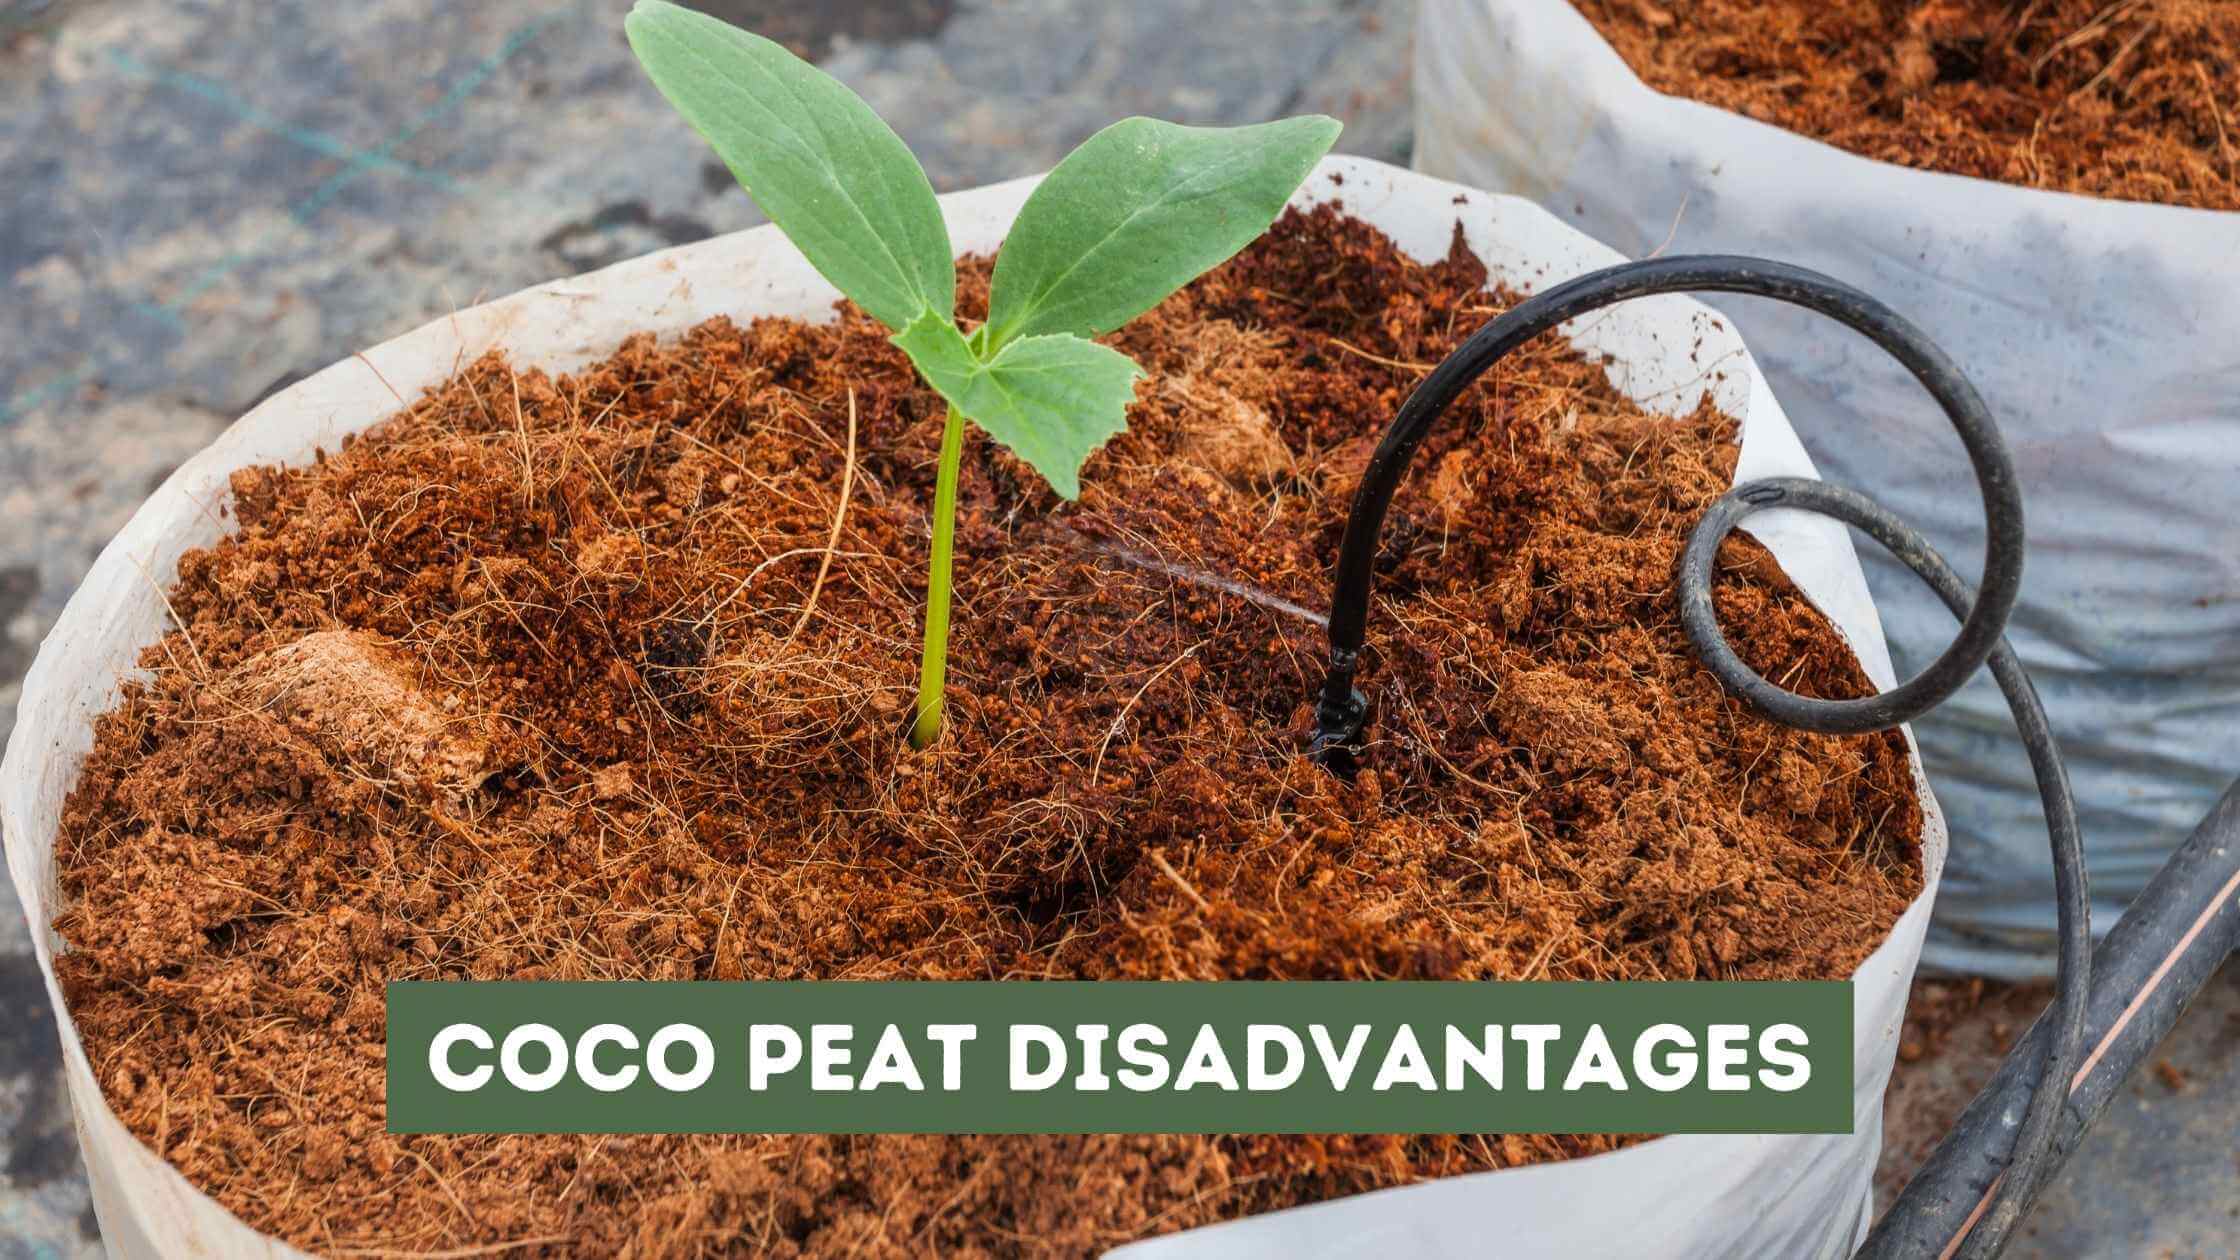 Coco Peat Disadvantages